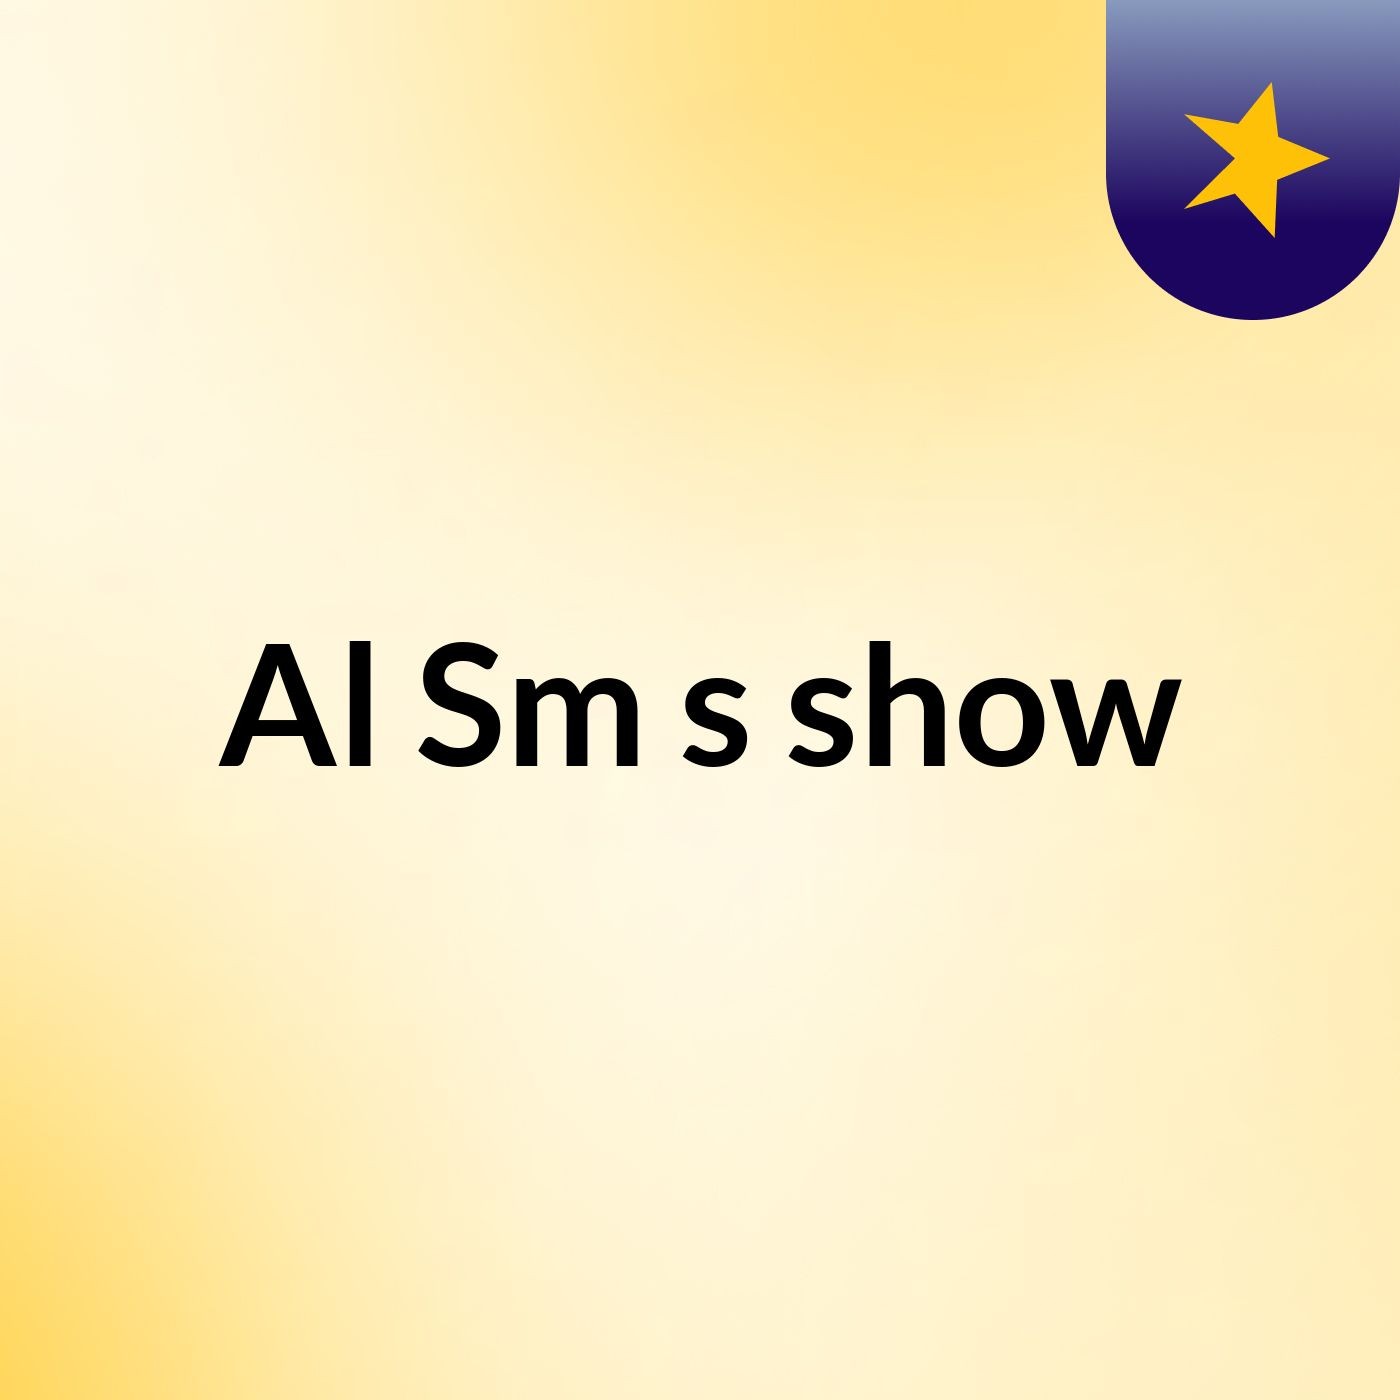 Al Sm's show